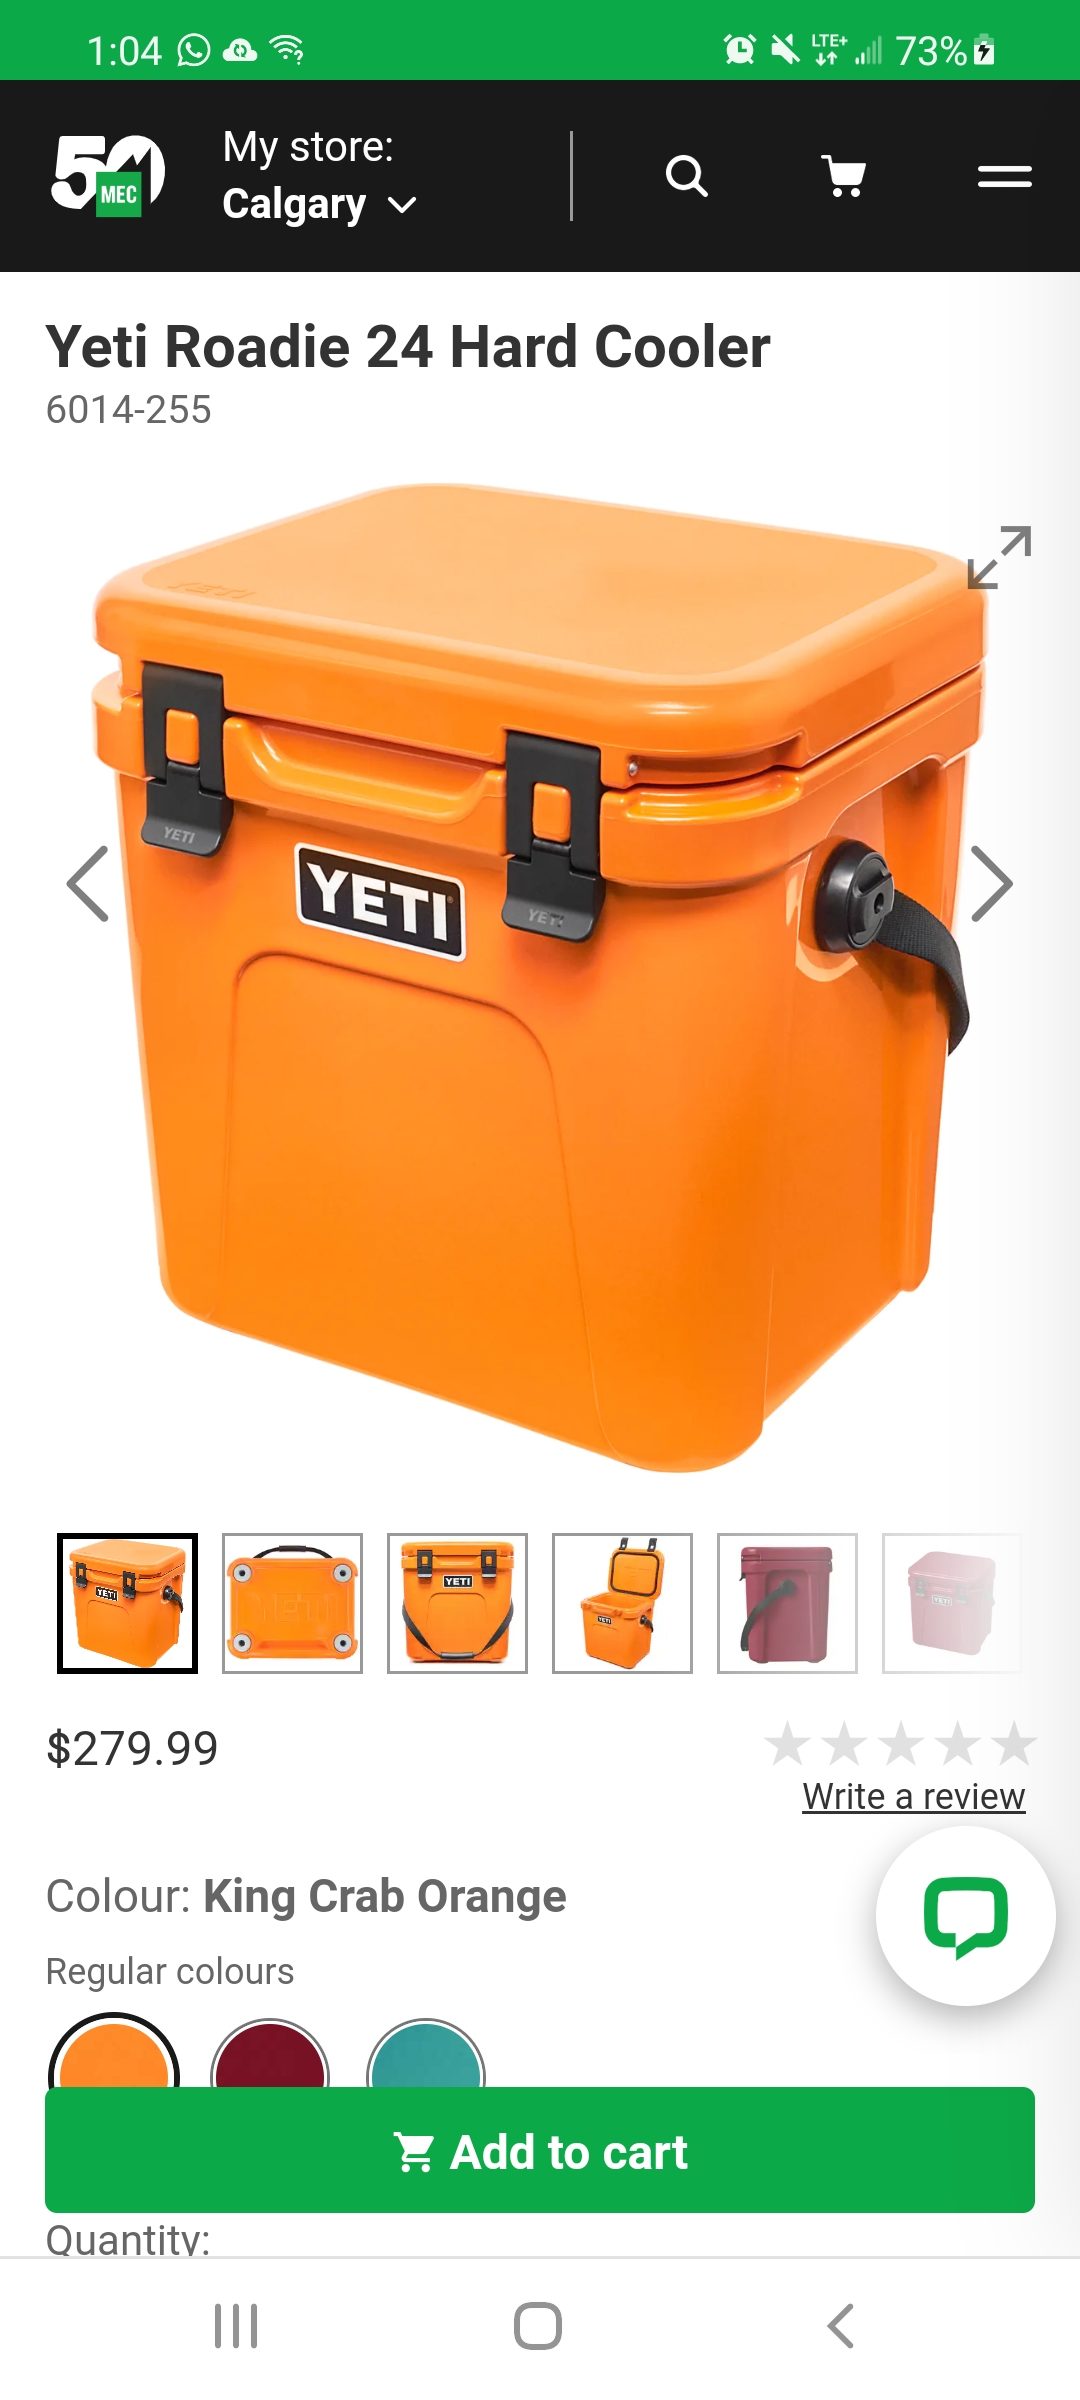 Mountain Equipment Co-op] Yeti Roadie 24 Hard Cooler (King Crab Orange)  $279.99 - RedFlagDeals.com Forums